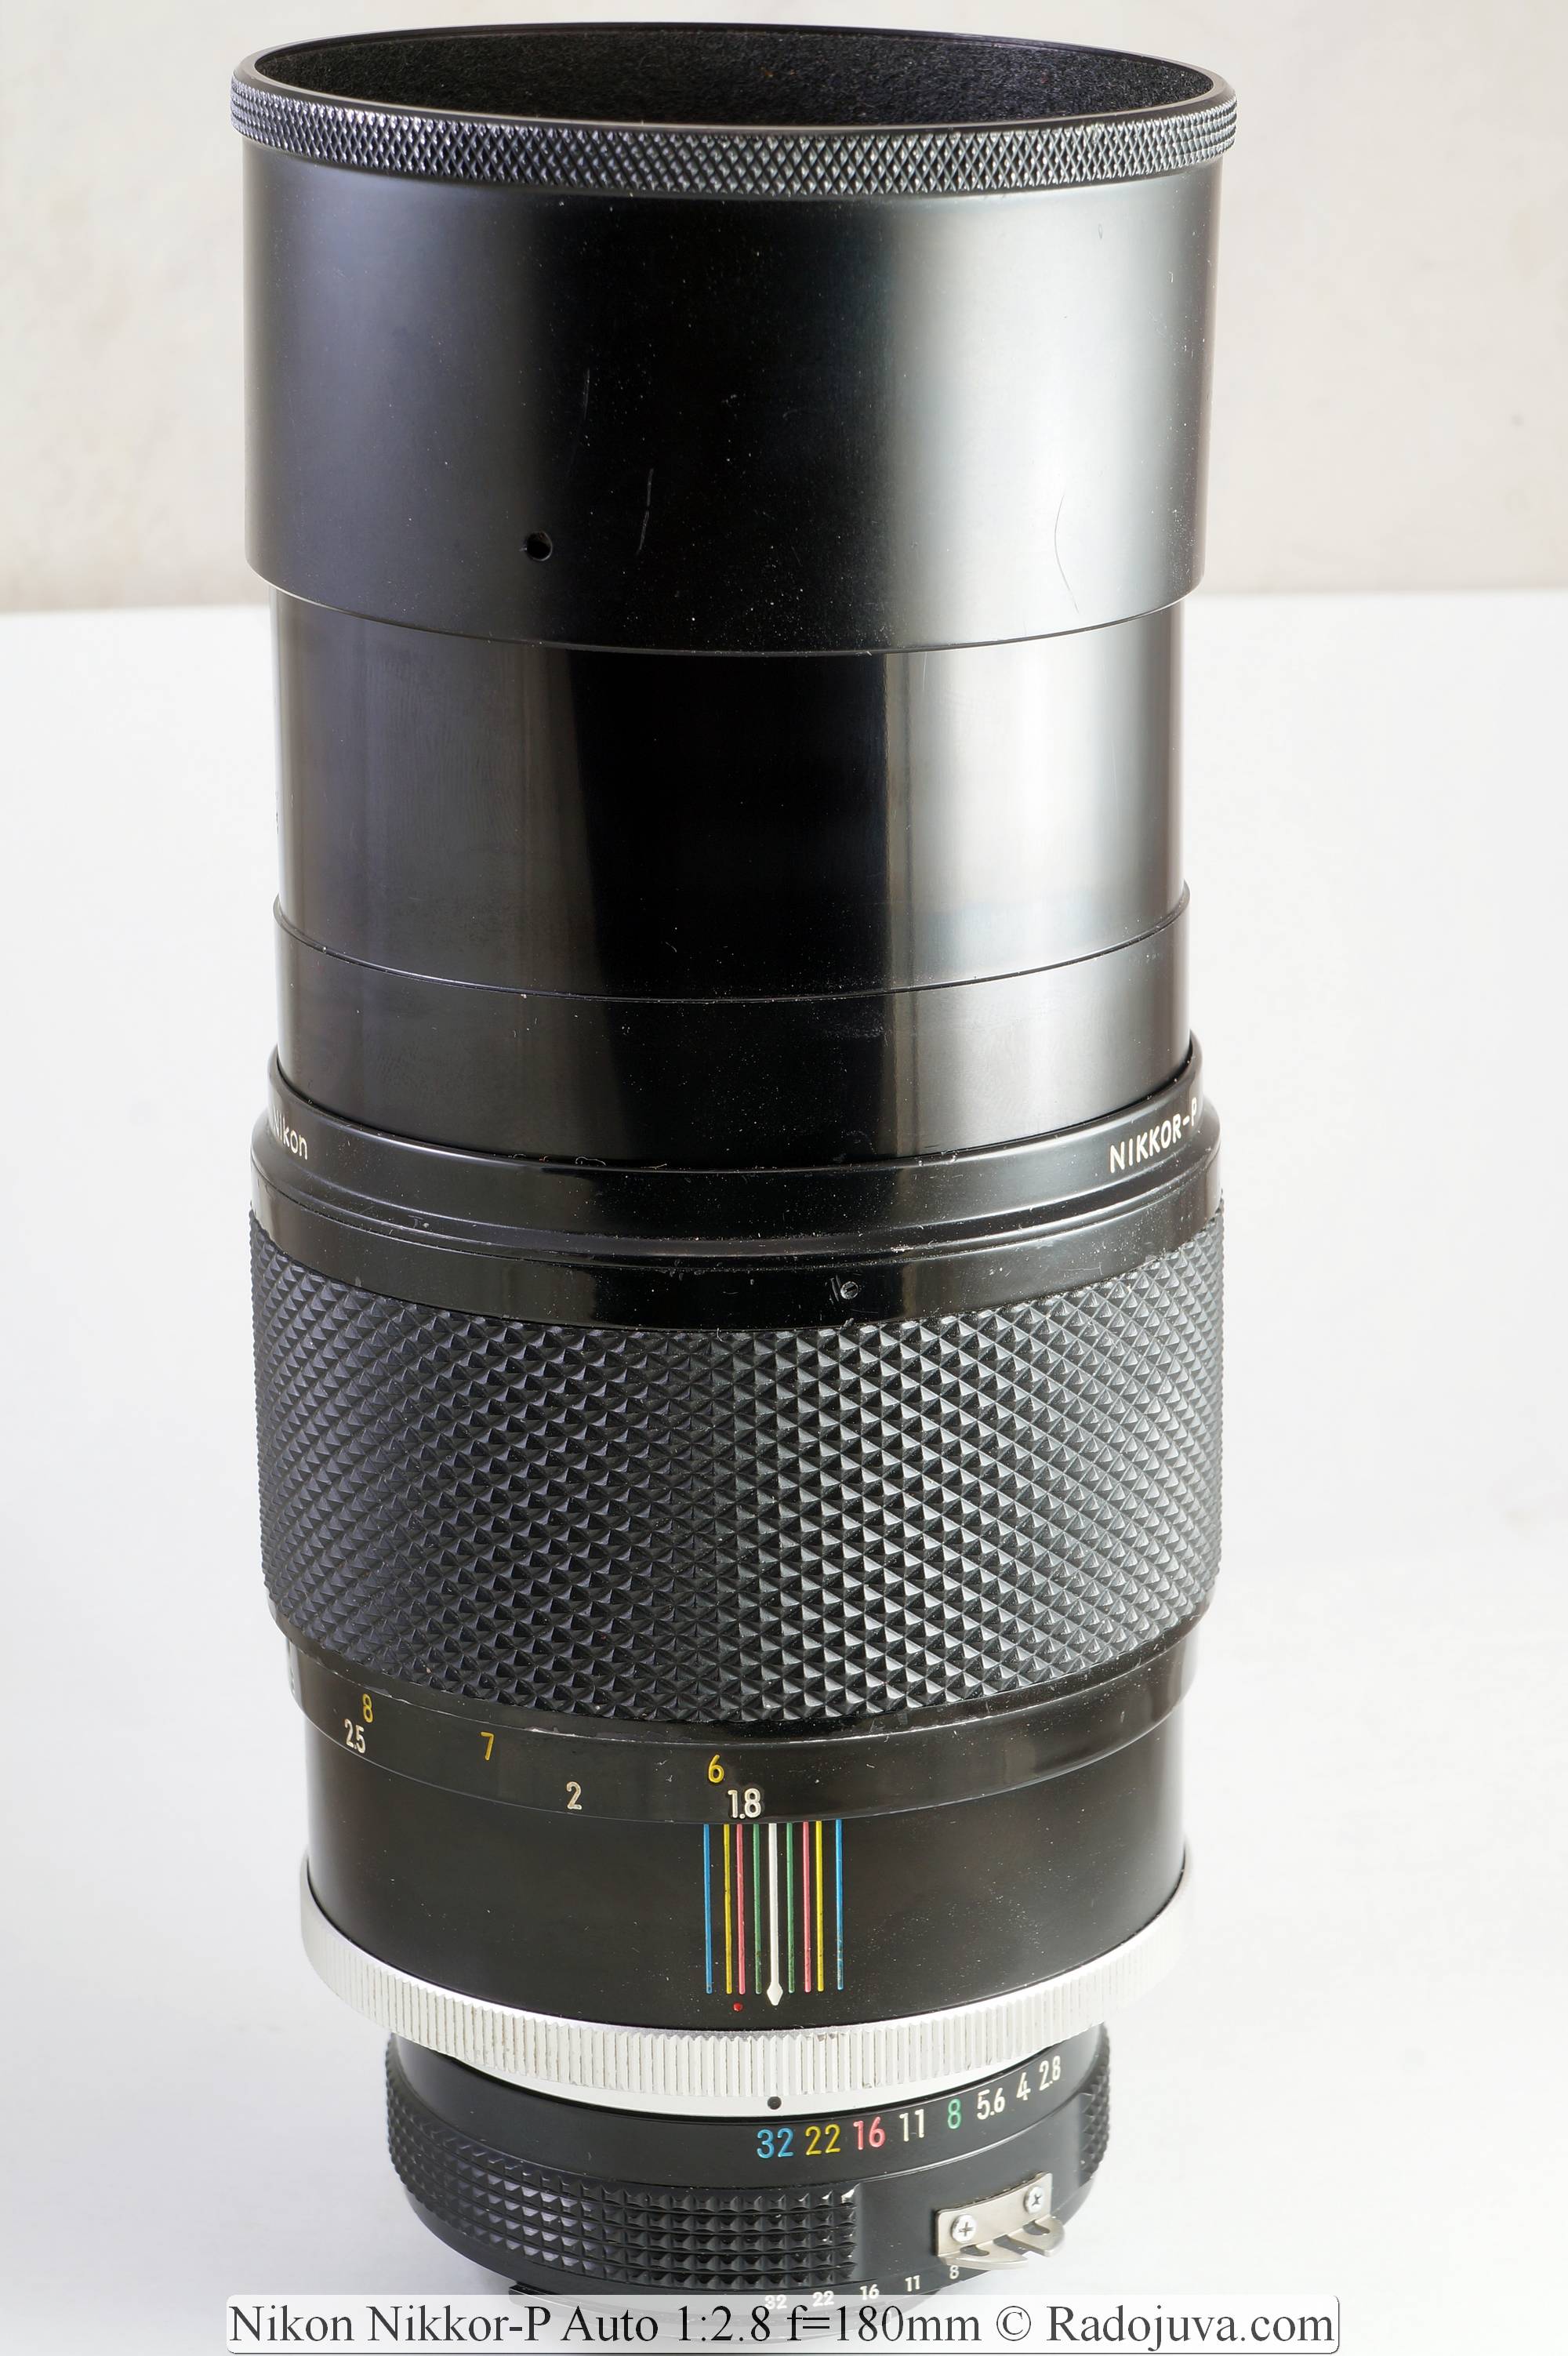 Nikon Nikkor-P Auto 1:2.8 f=180mm